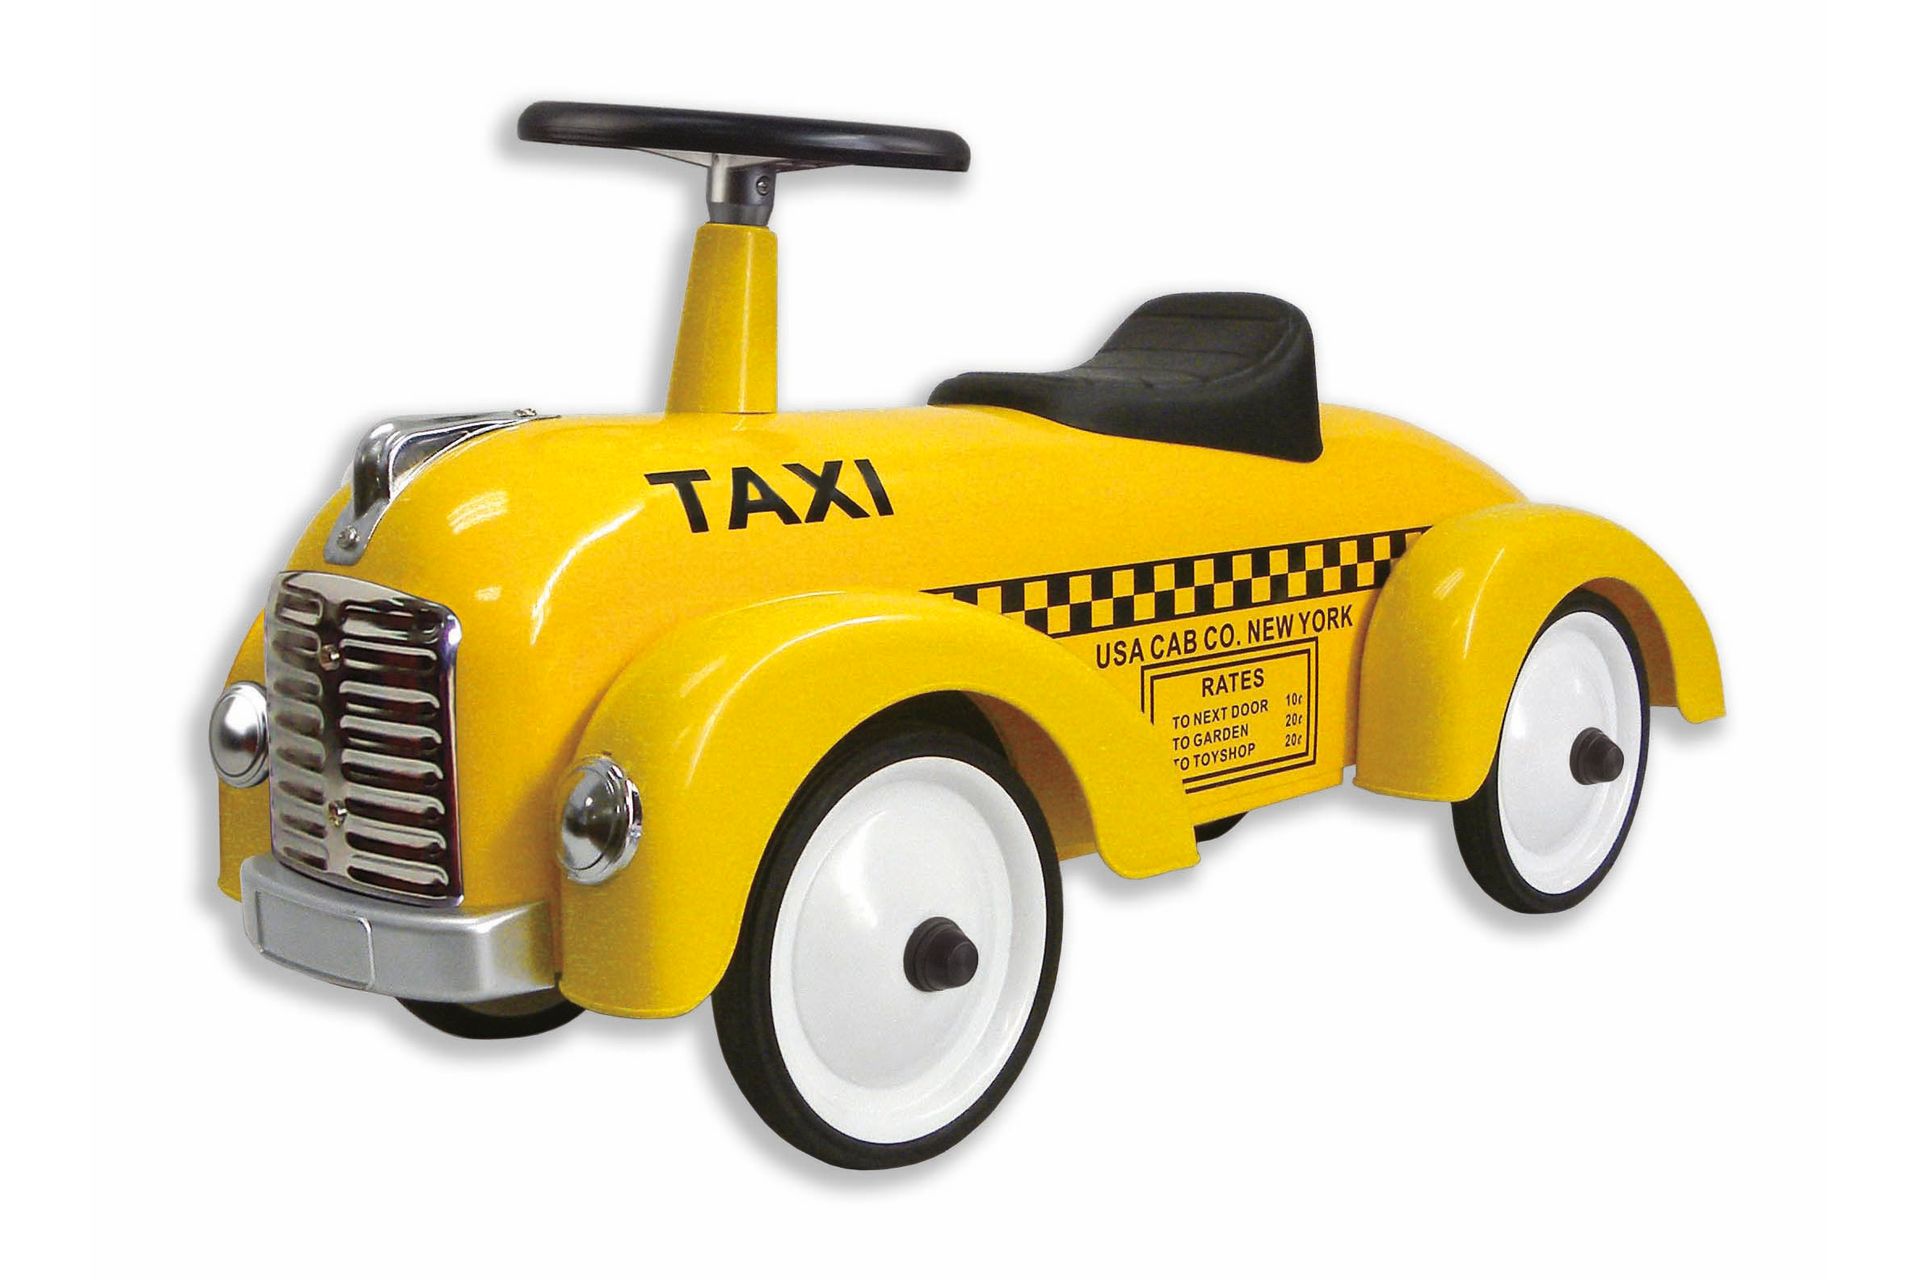 Taxi-racer - Yellow cab